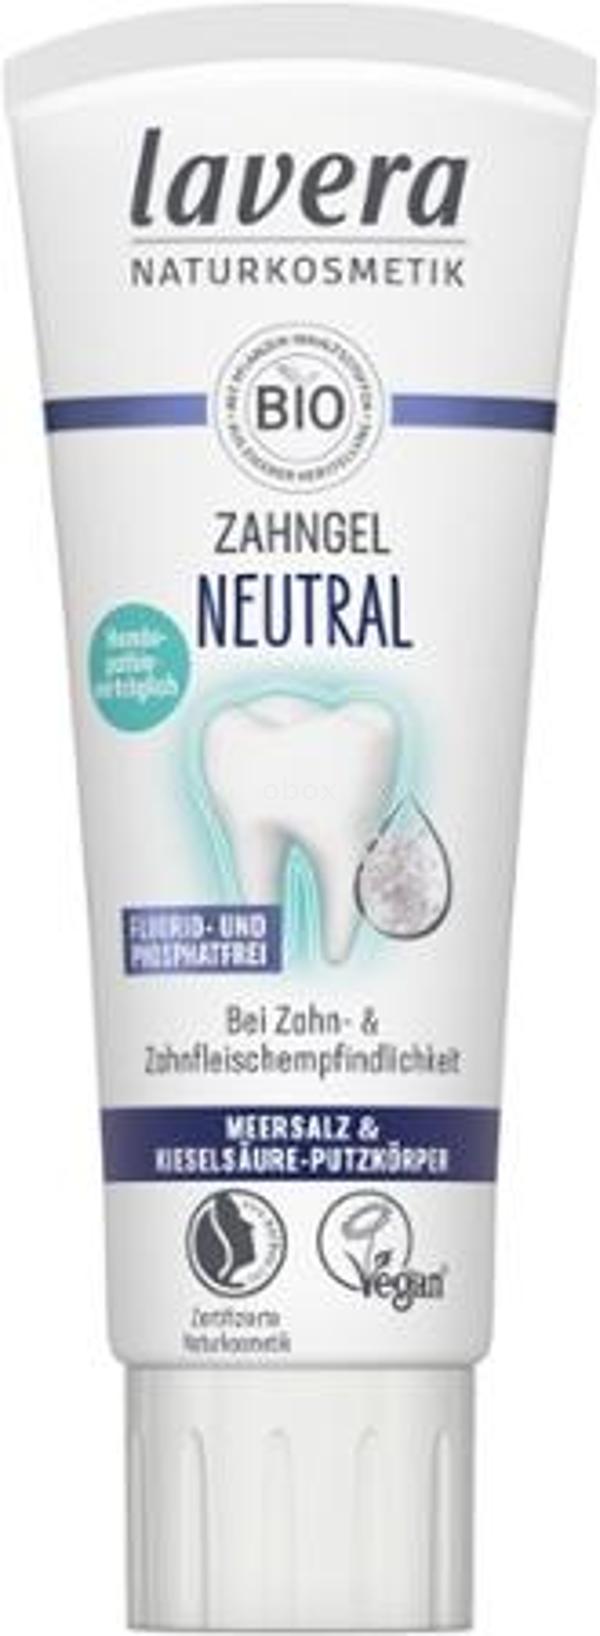 Produktfoto zu Zahngel Neutral